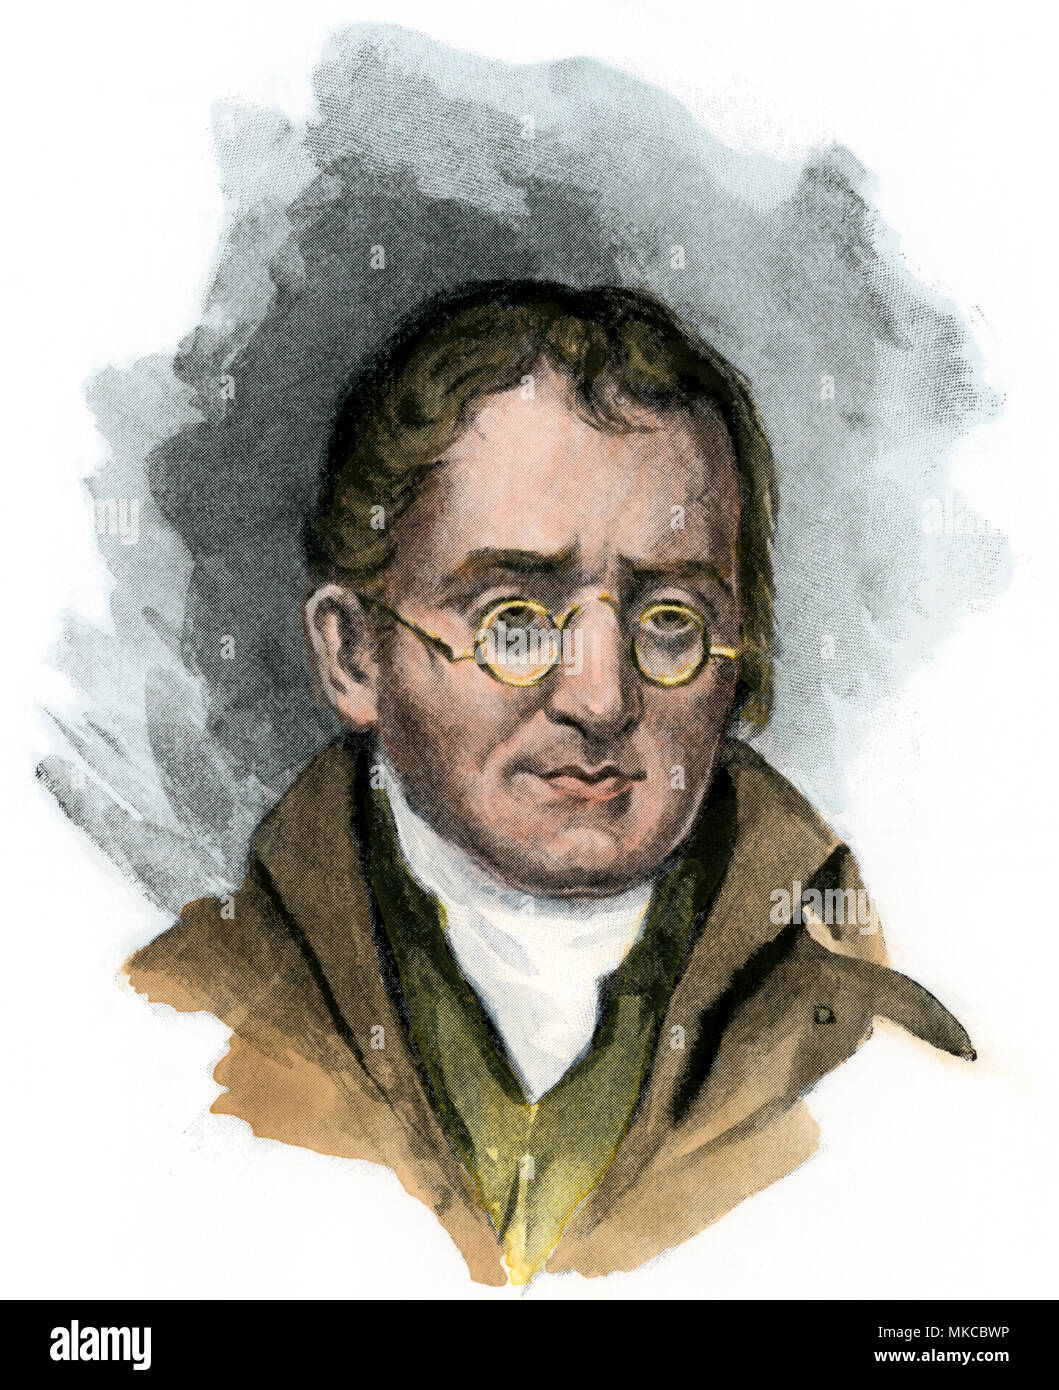 English scientist John Dalton. Hand-colored halftone of an illustration Stock Photo